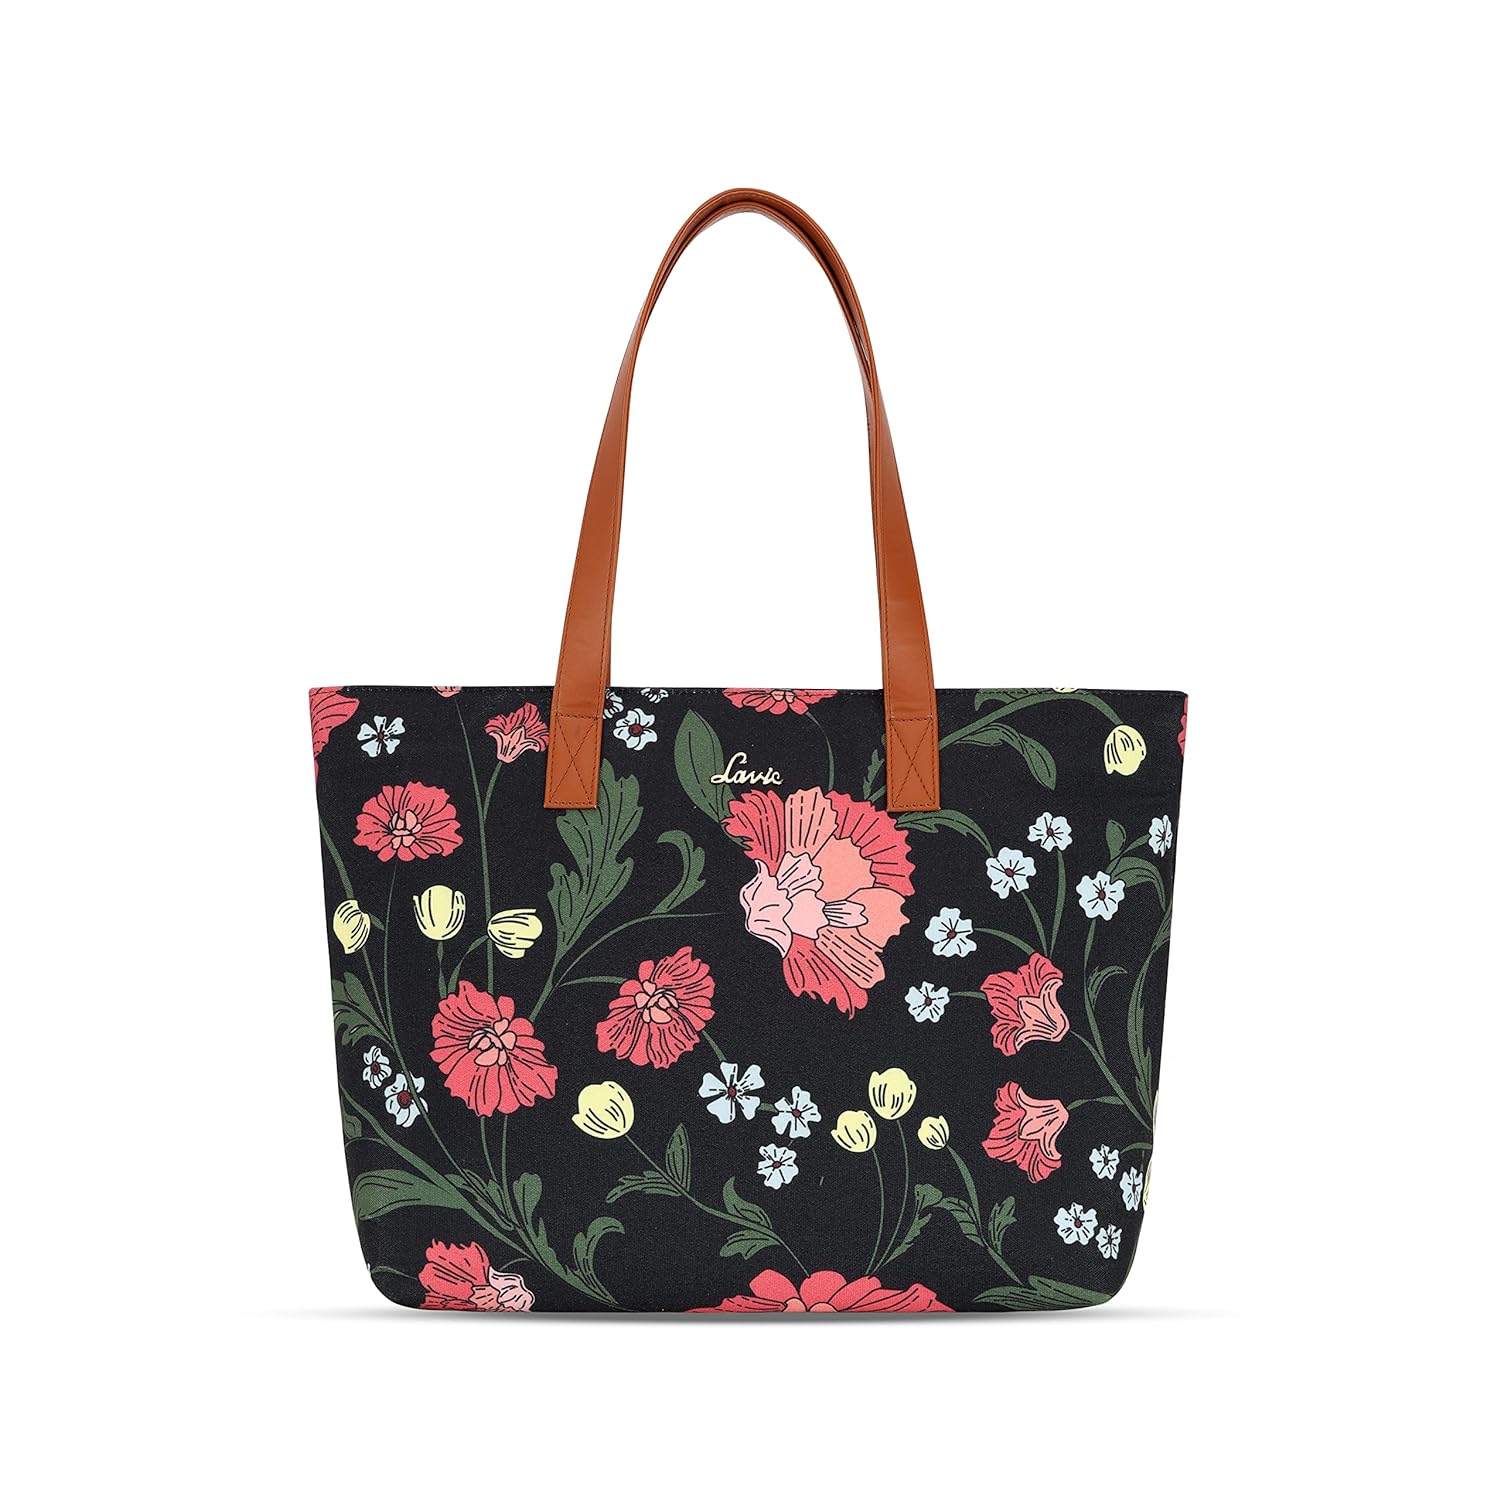 Lavie Women's Floral Tote Bag